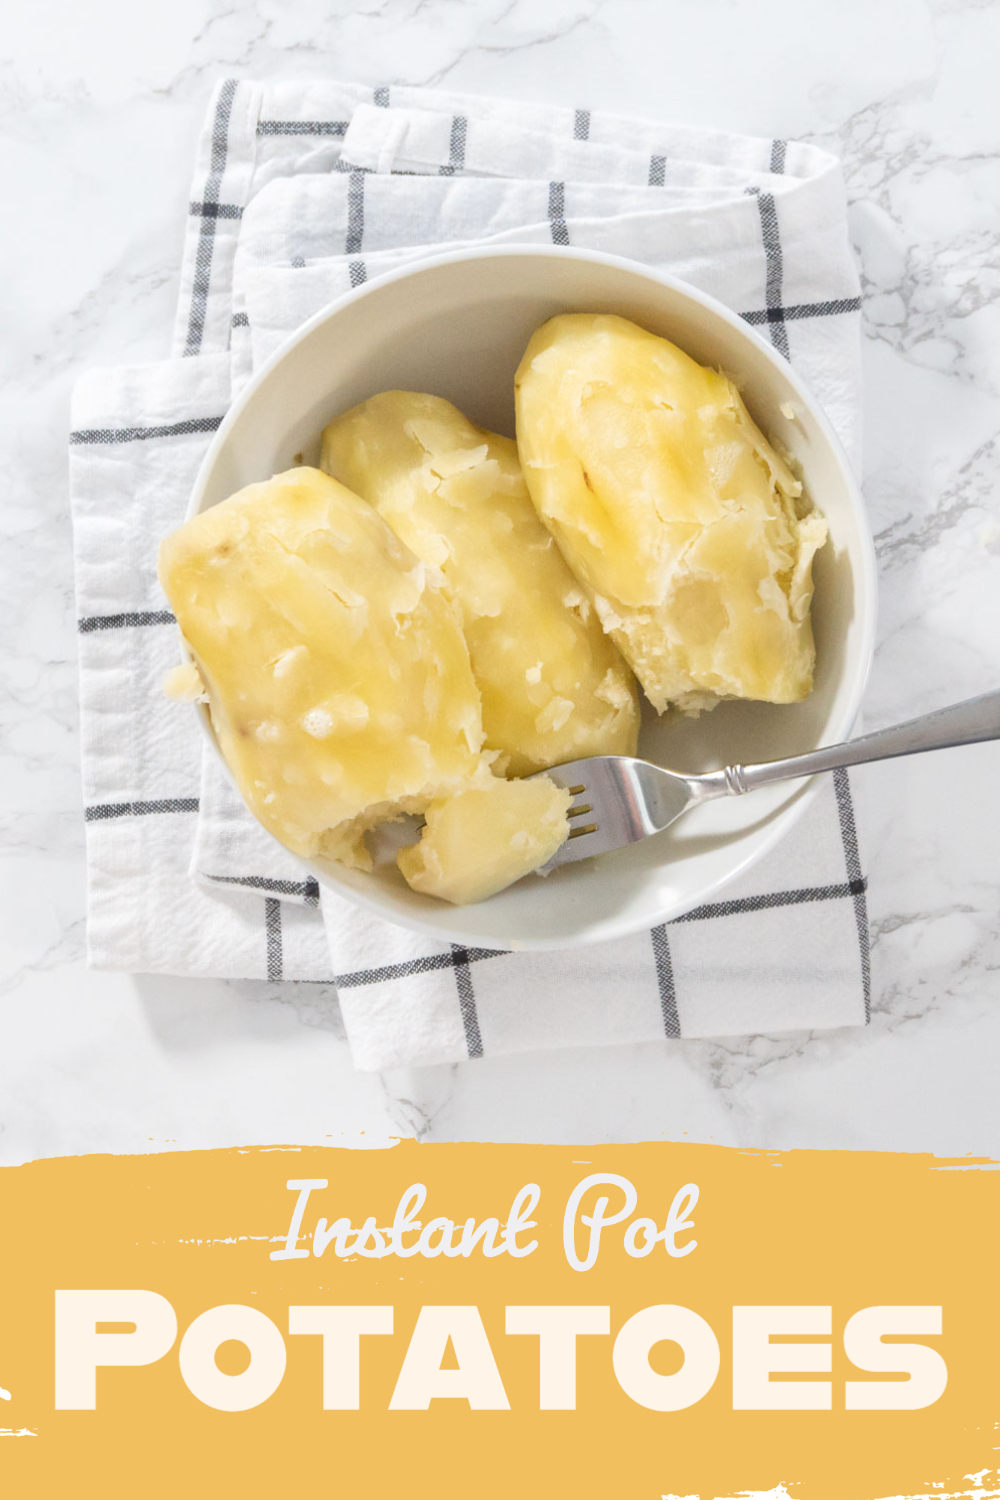 Easy Instant Pot Potatoes